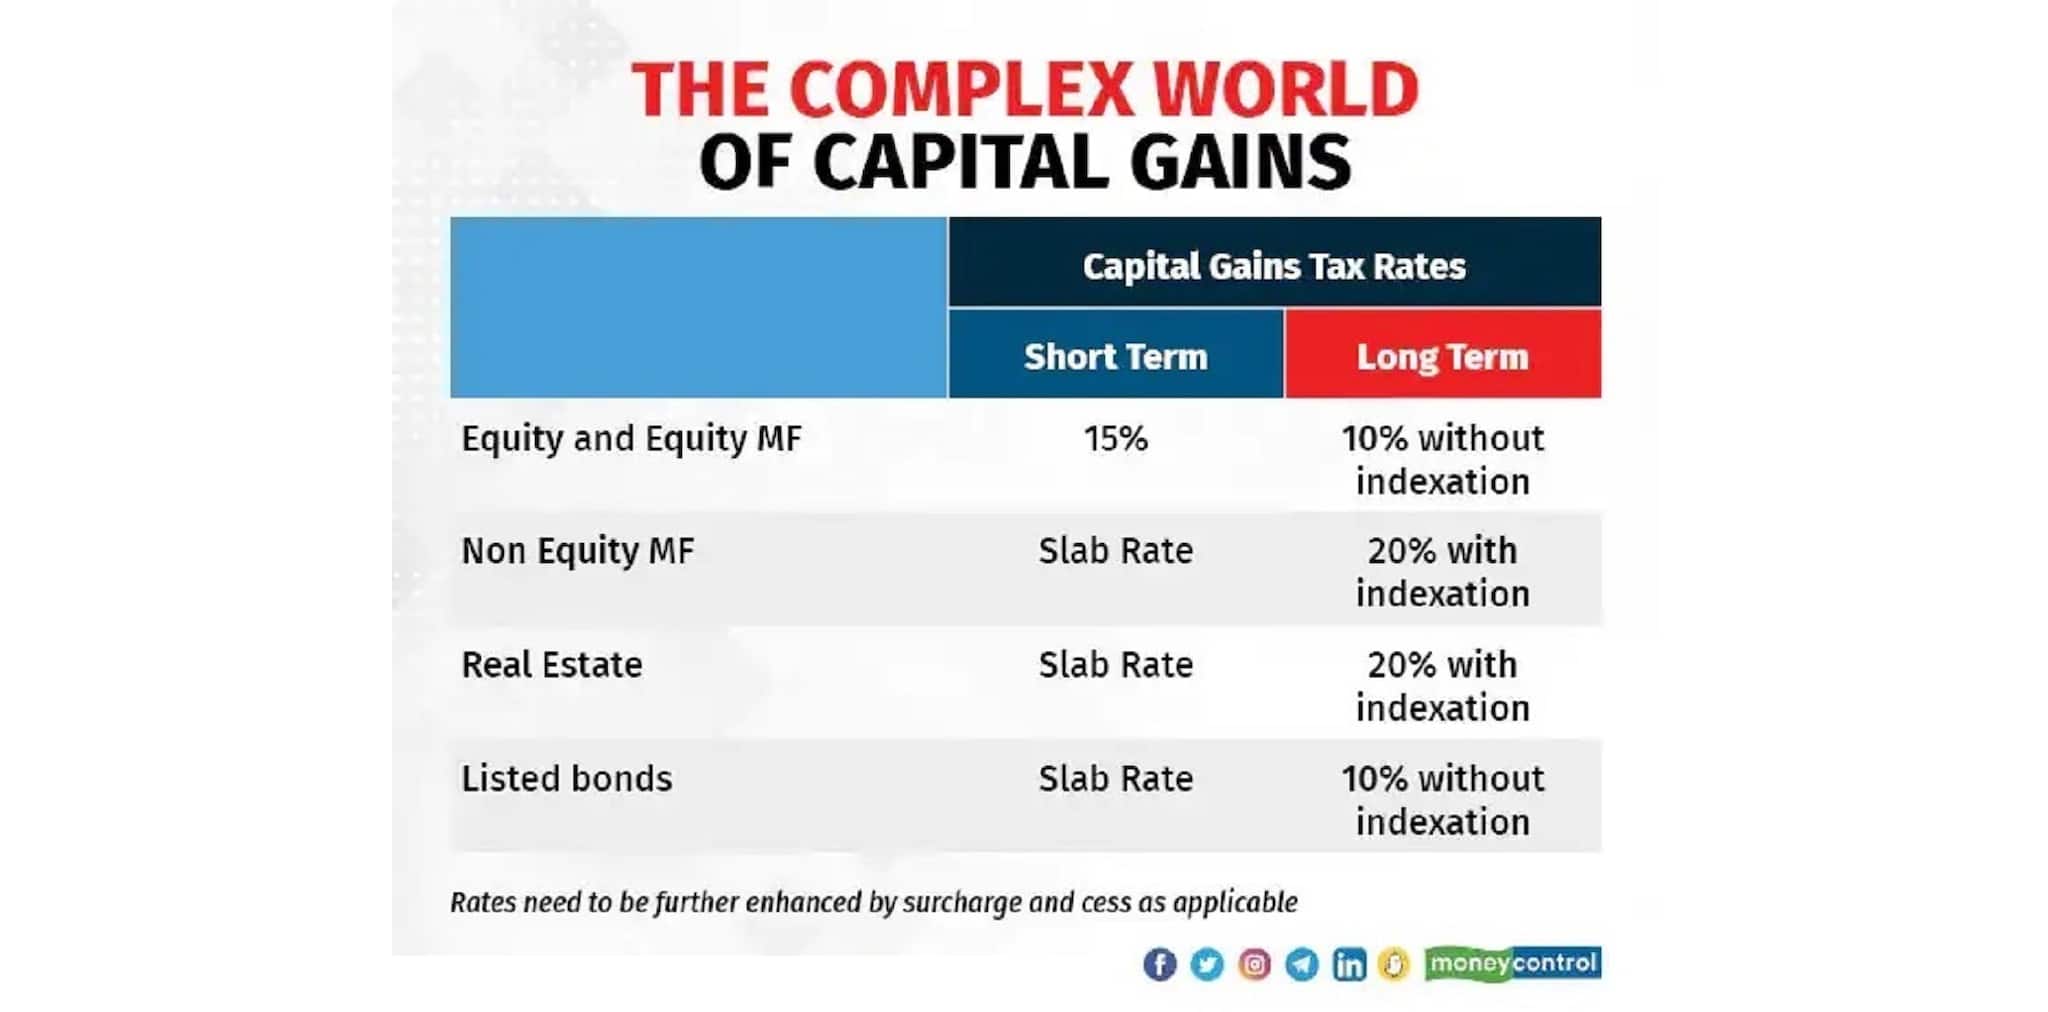 Long-Term vs. Short-Term Capital Gains